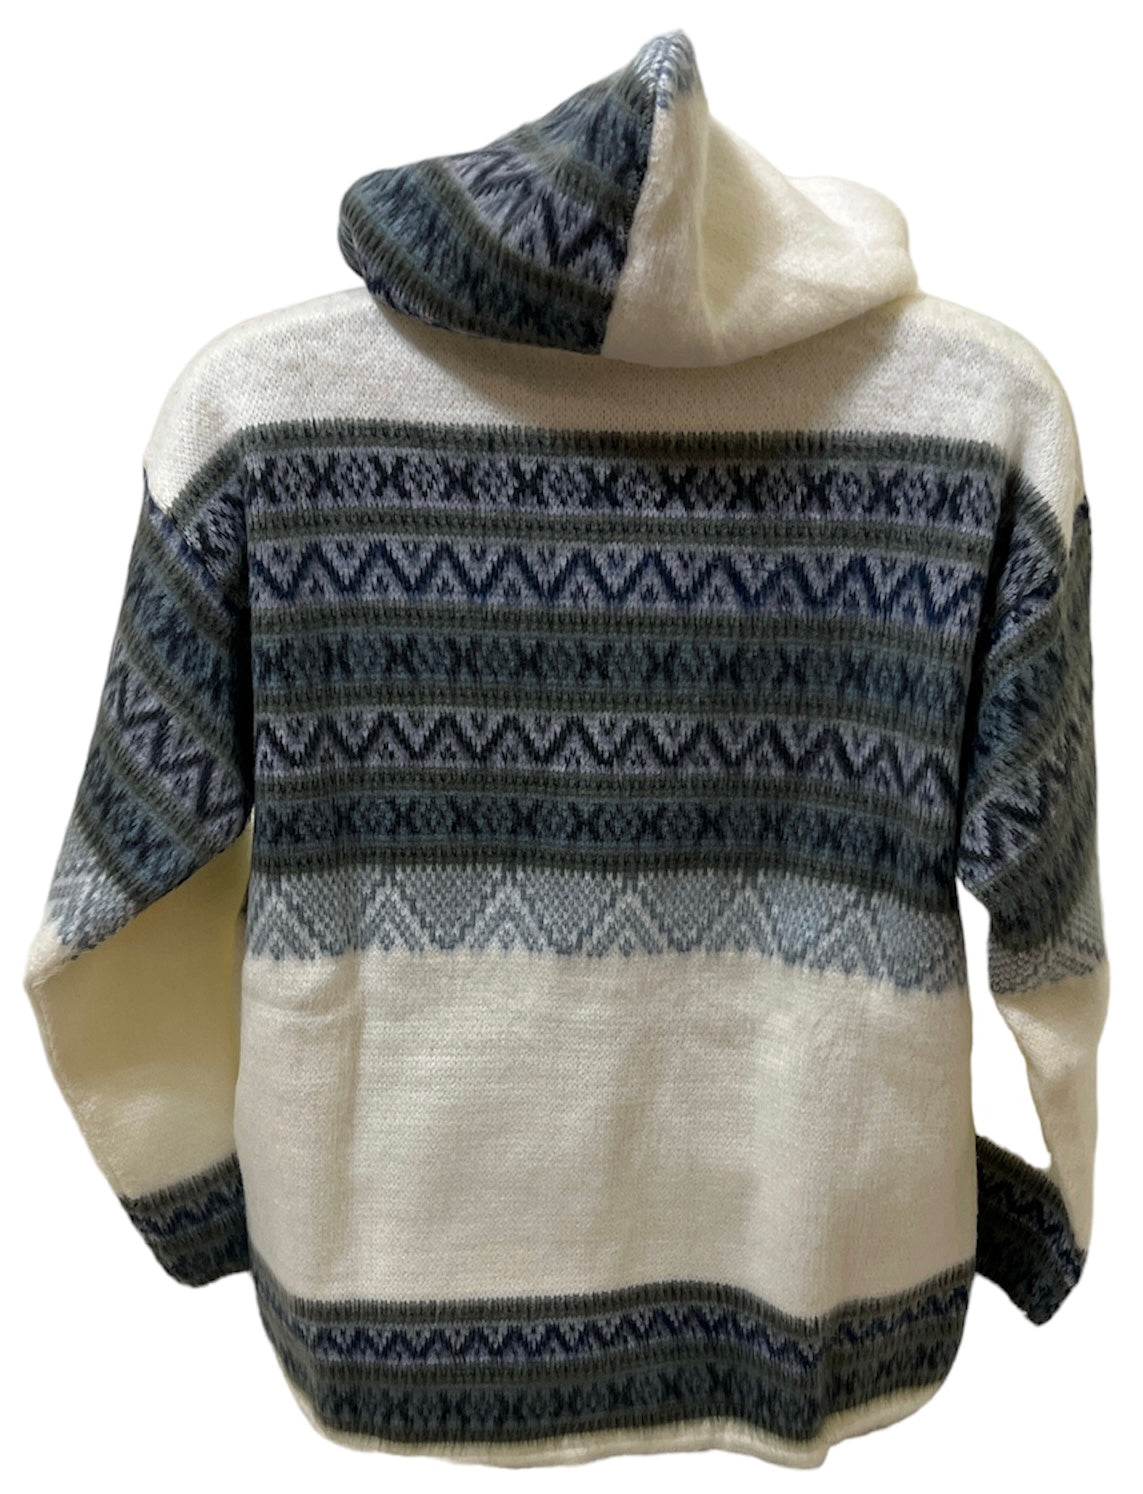 Alpaca White designed sweater/jacket